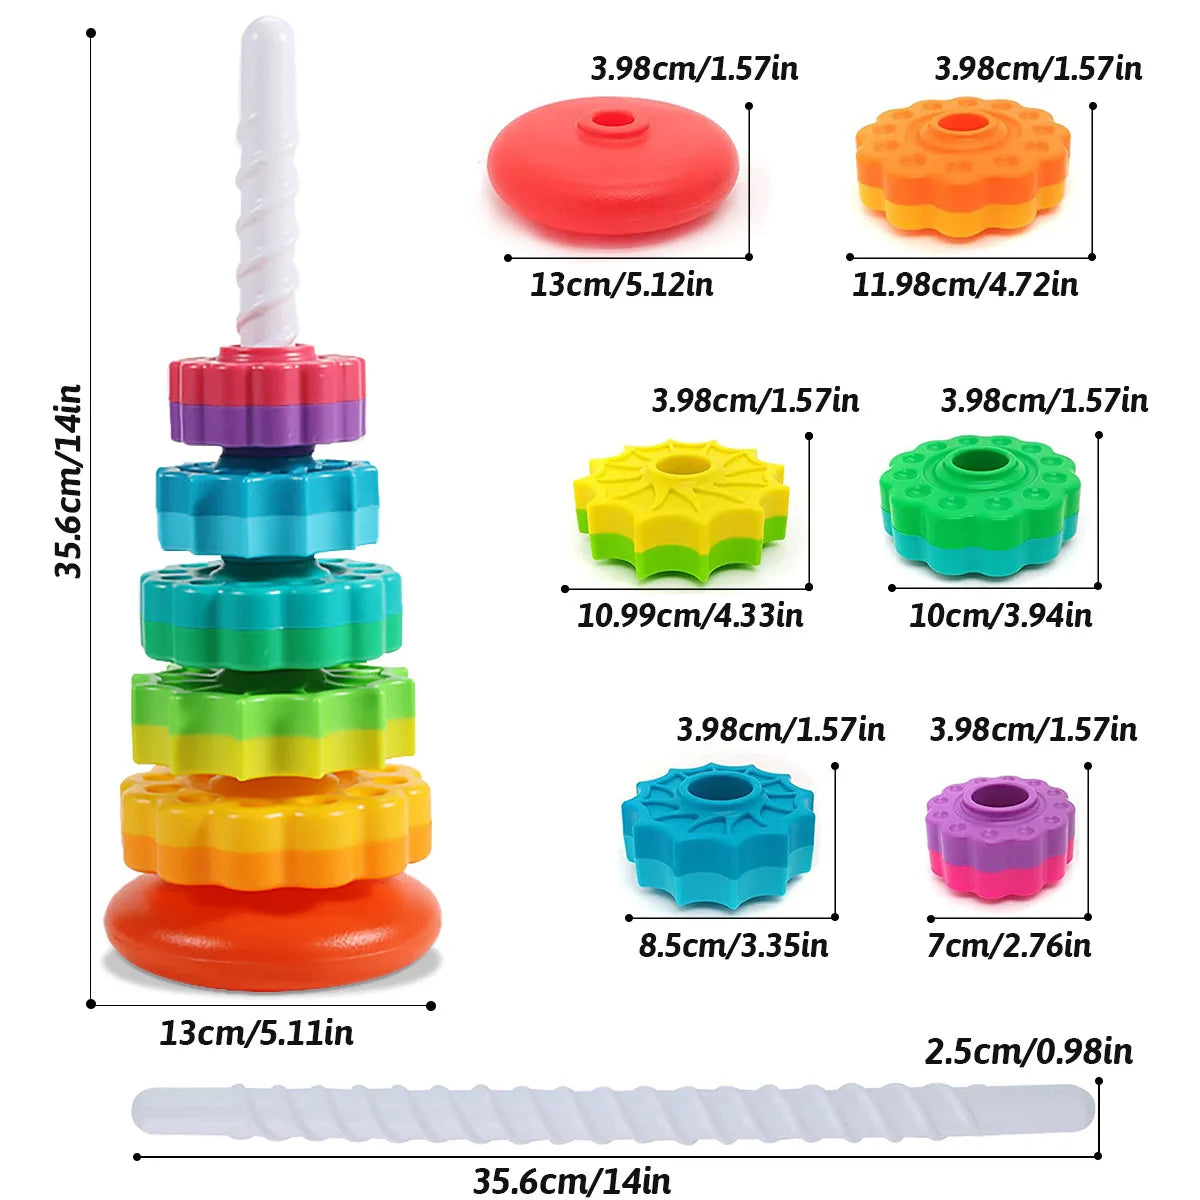 Montessori educational toy set - multicolored pyramid